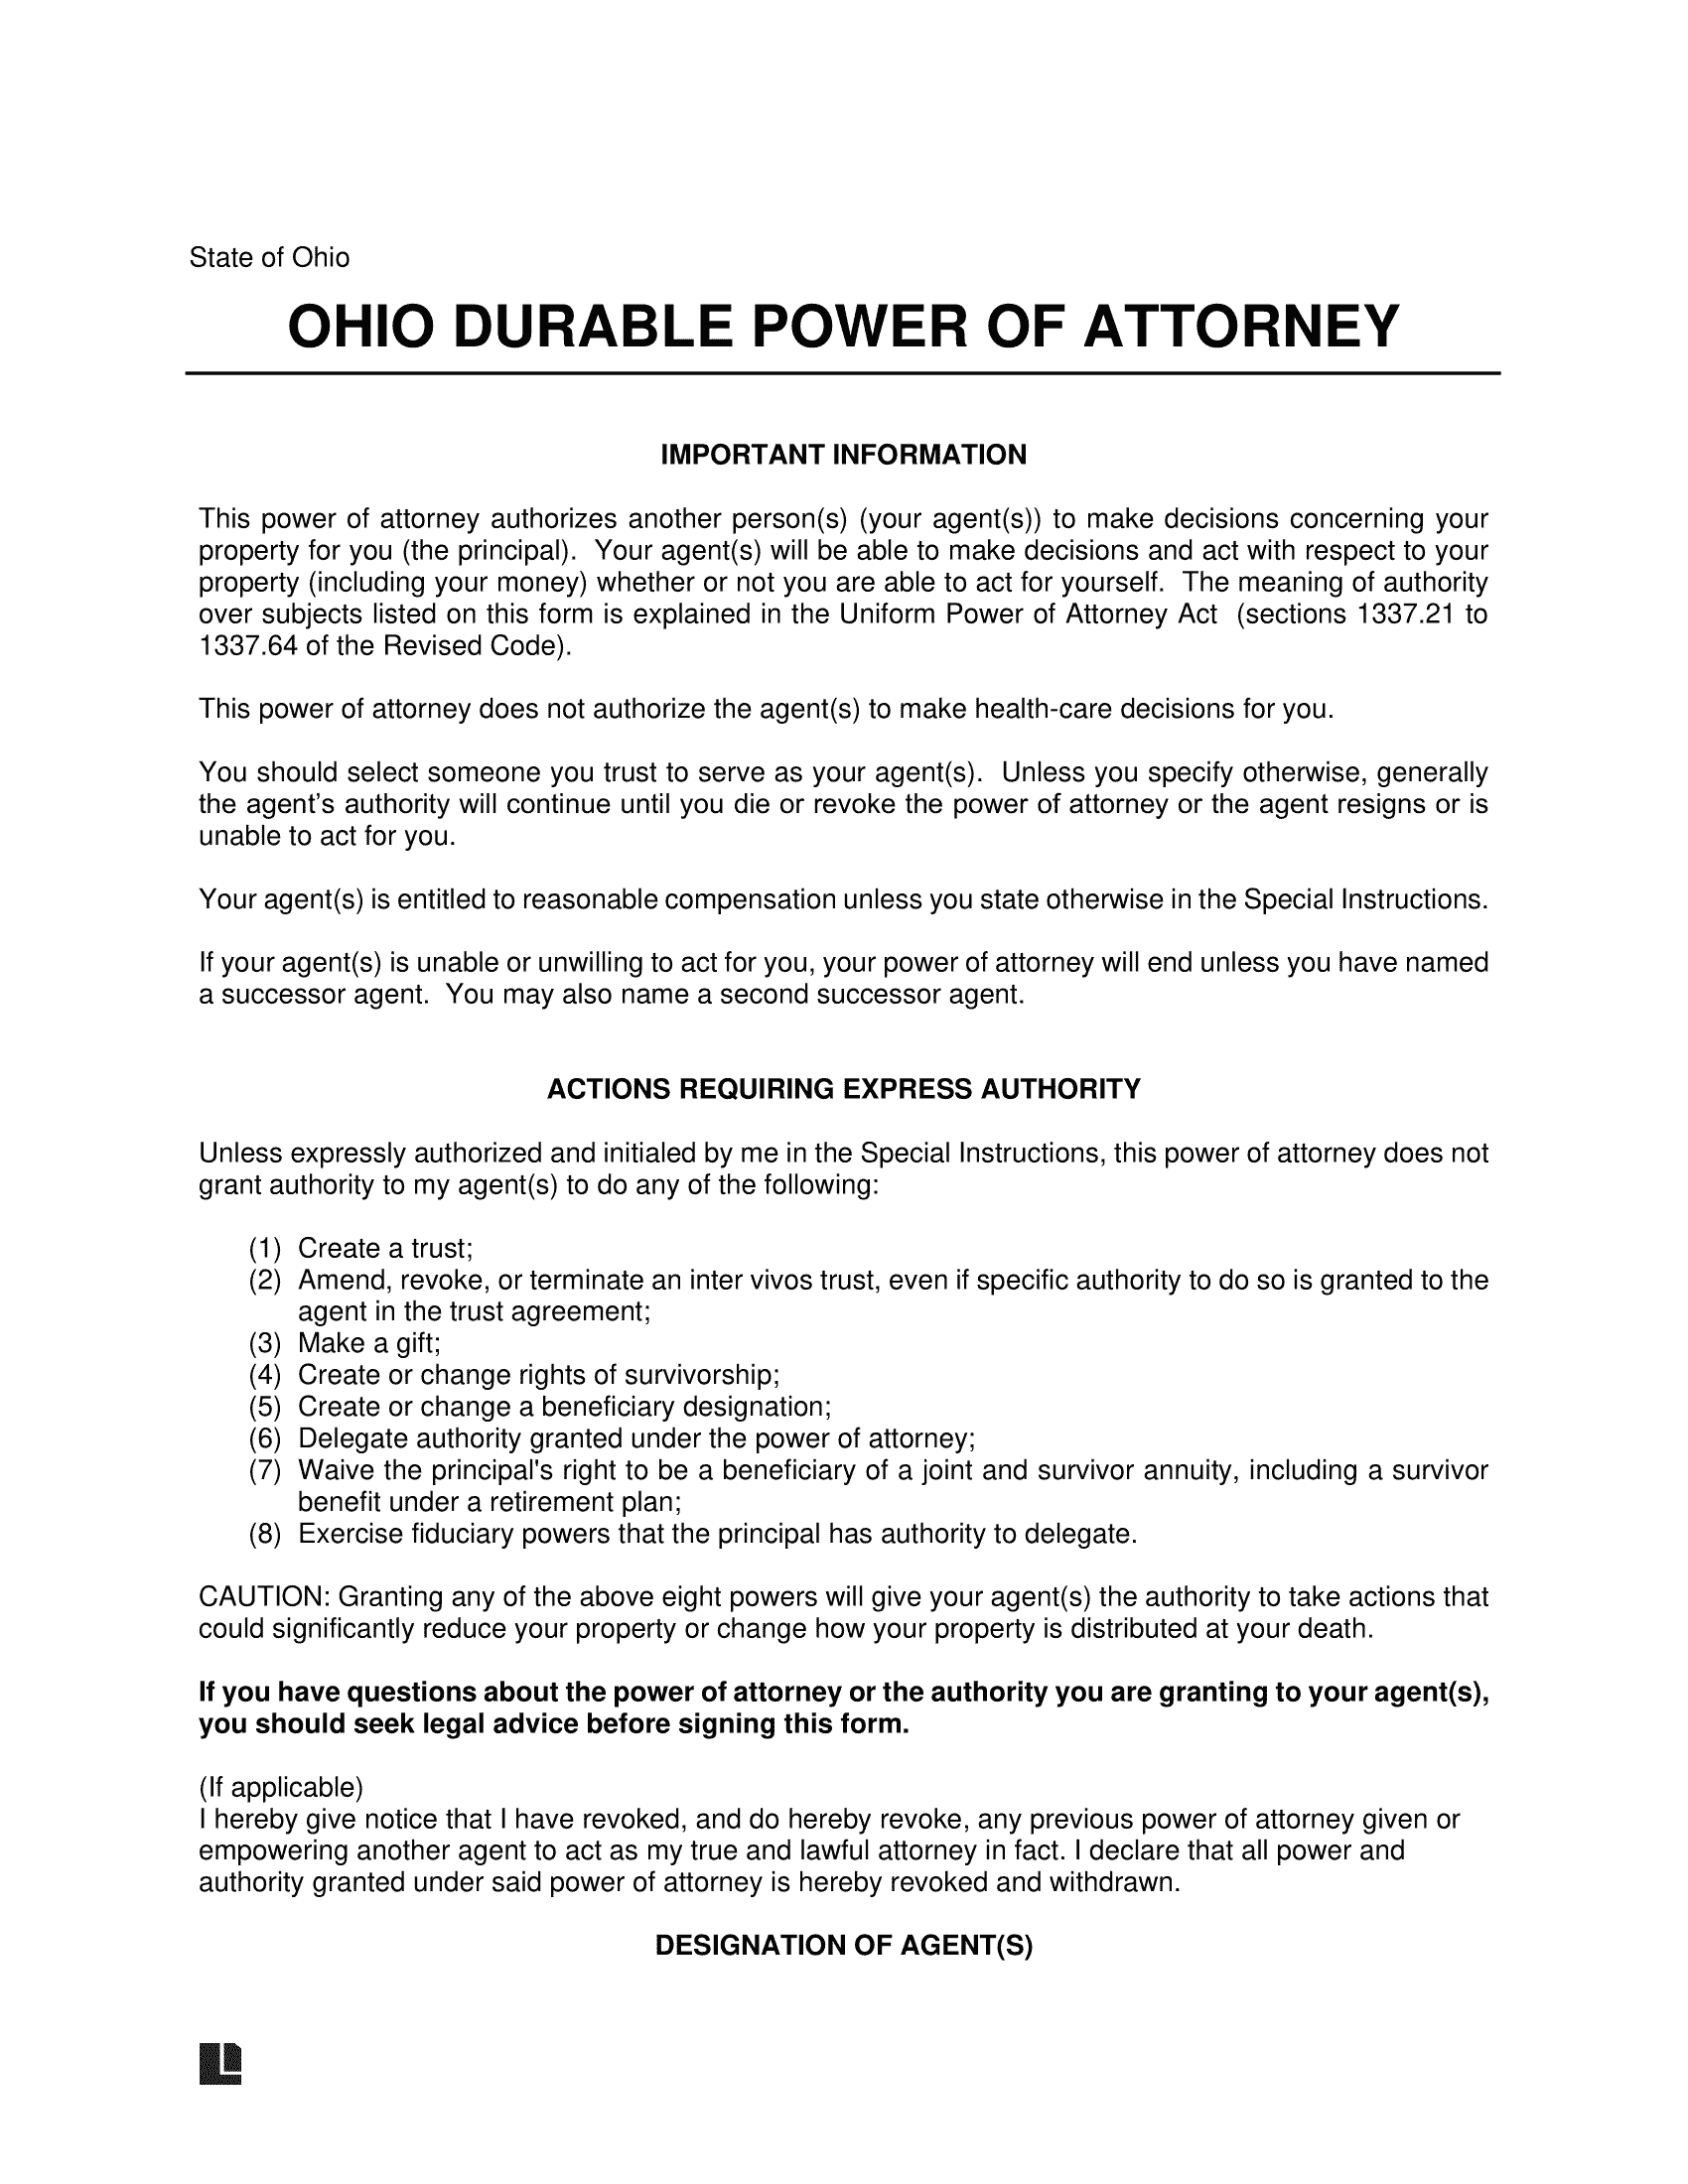 Ohio Durable Statutory Power of Attorney Form